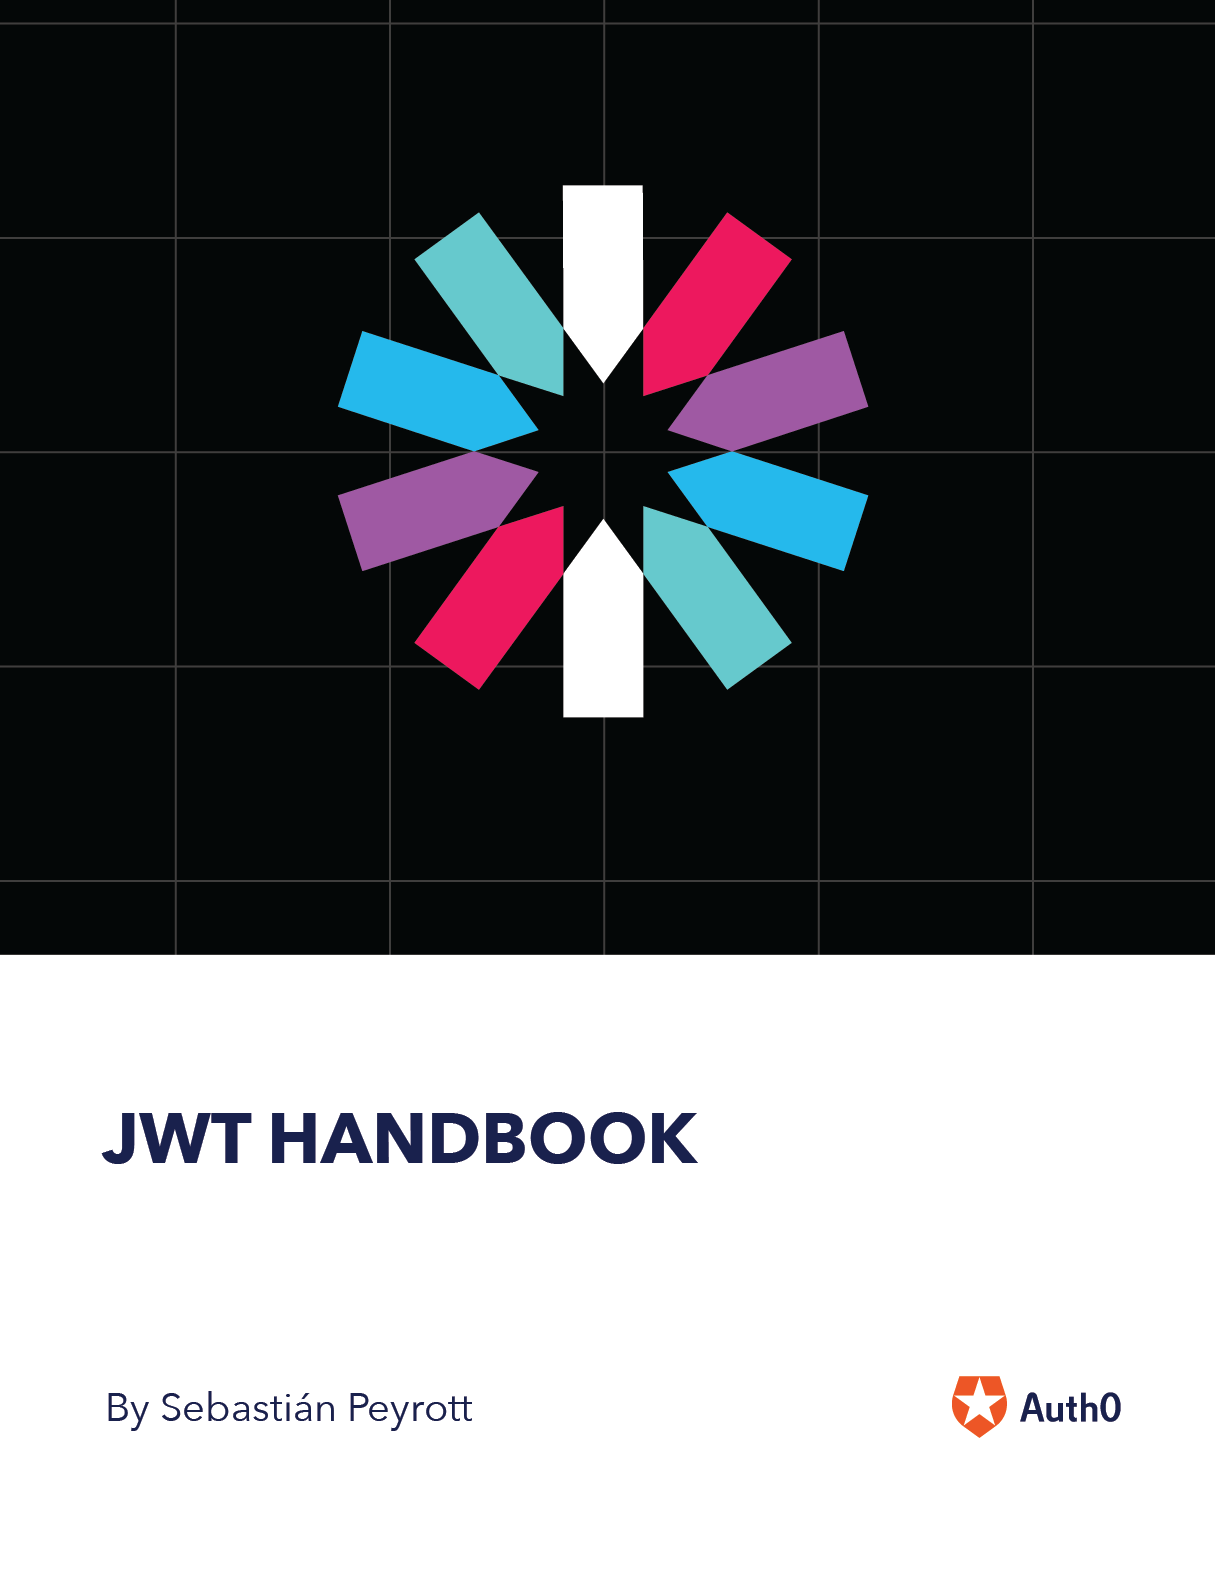 The JWT Handbook